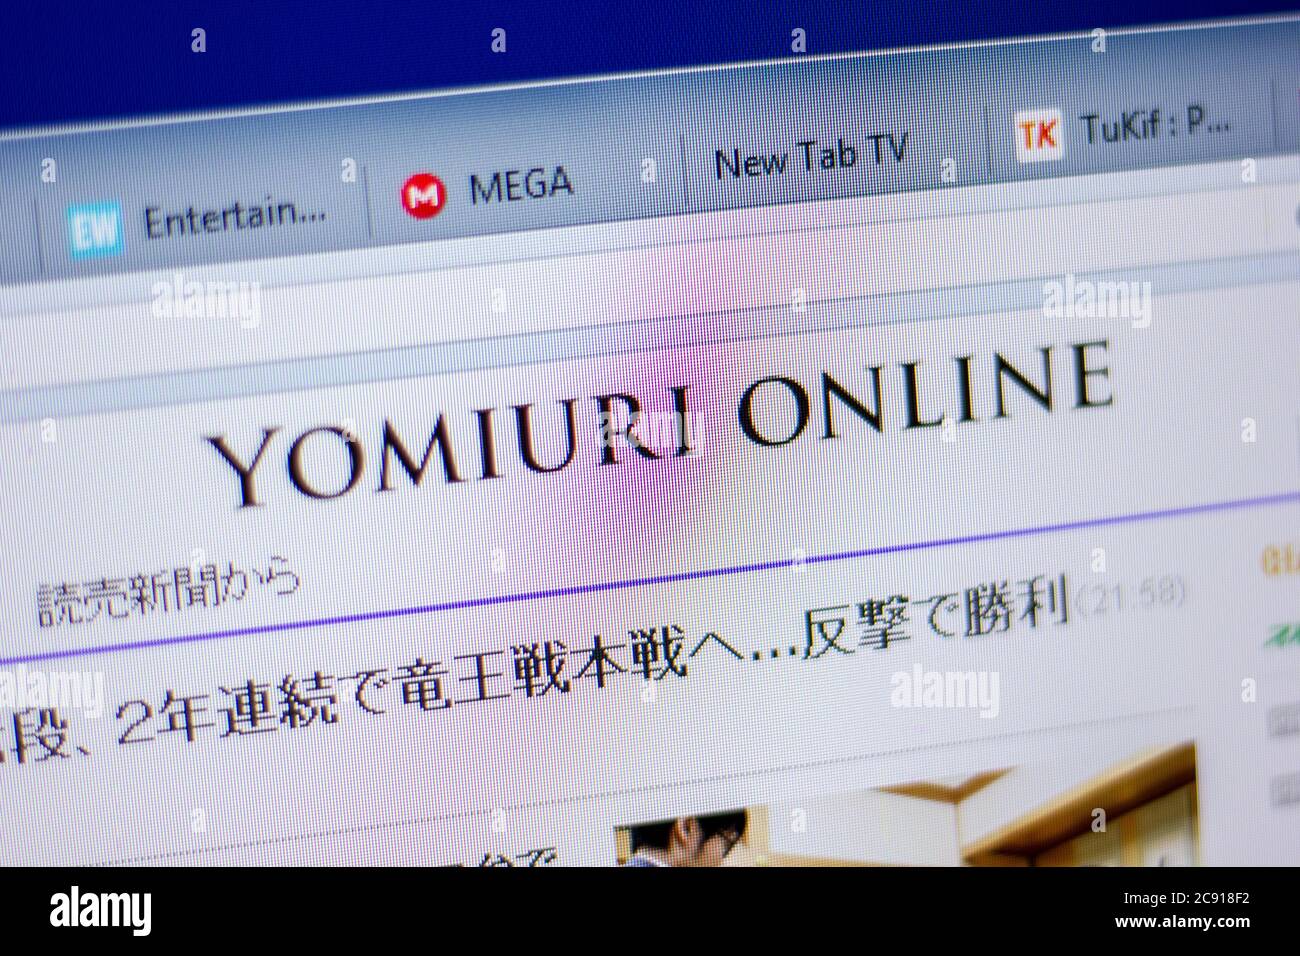 Ryazan, Russia - June 05, 2018: Homepage of Yomiuri website on the display of PC, url - Yomiuri.co.jp Stock Photo